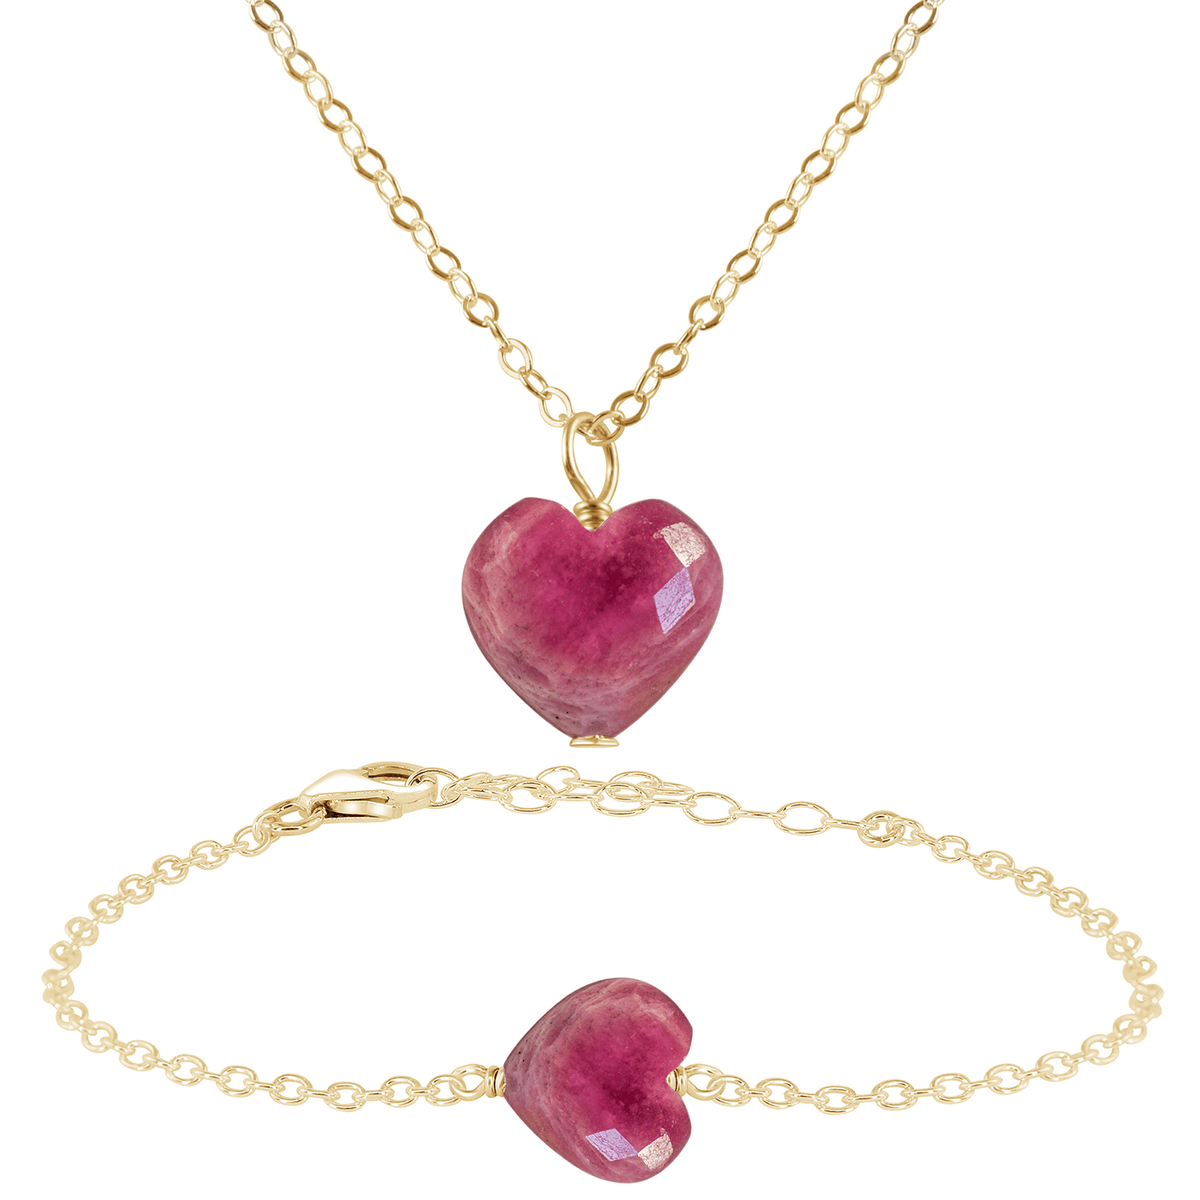 Ruby Crystal Heart Jewellery Set - Ruby Crystal Heart Jewellery Set - 14k Gold Fill / Cable / Necklace & Bracelet - Luna Tide Handmade Crystal Jewellery